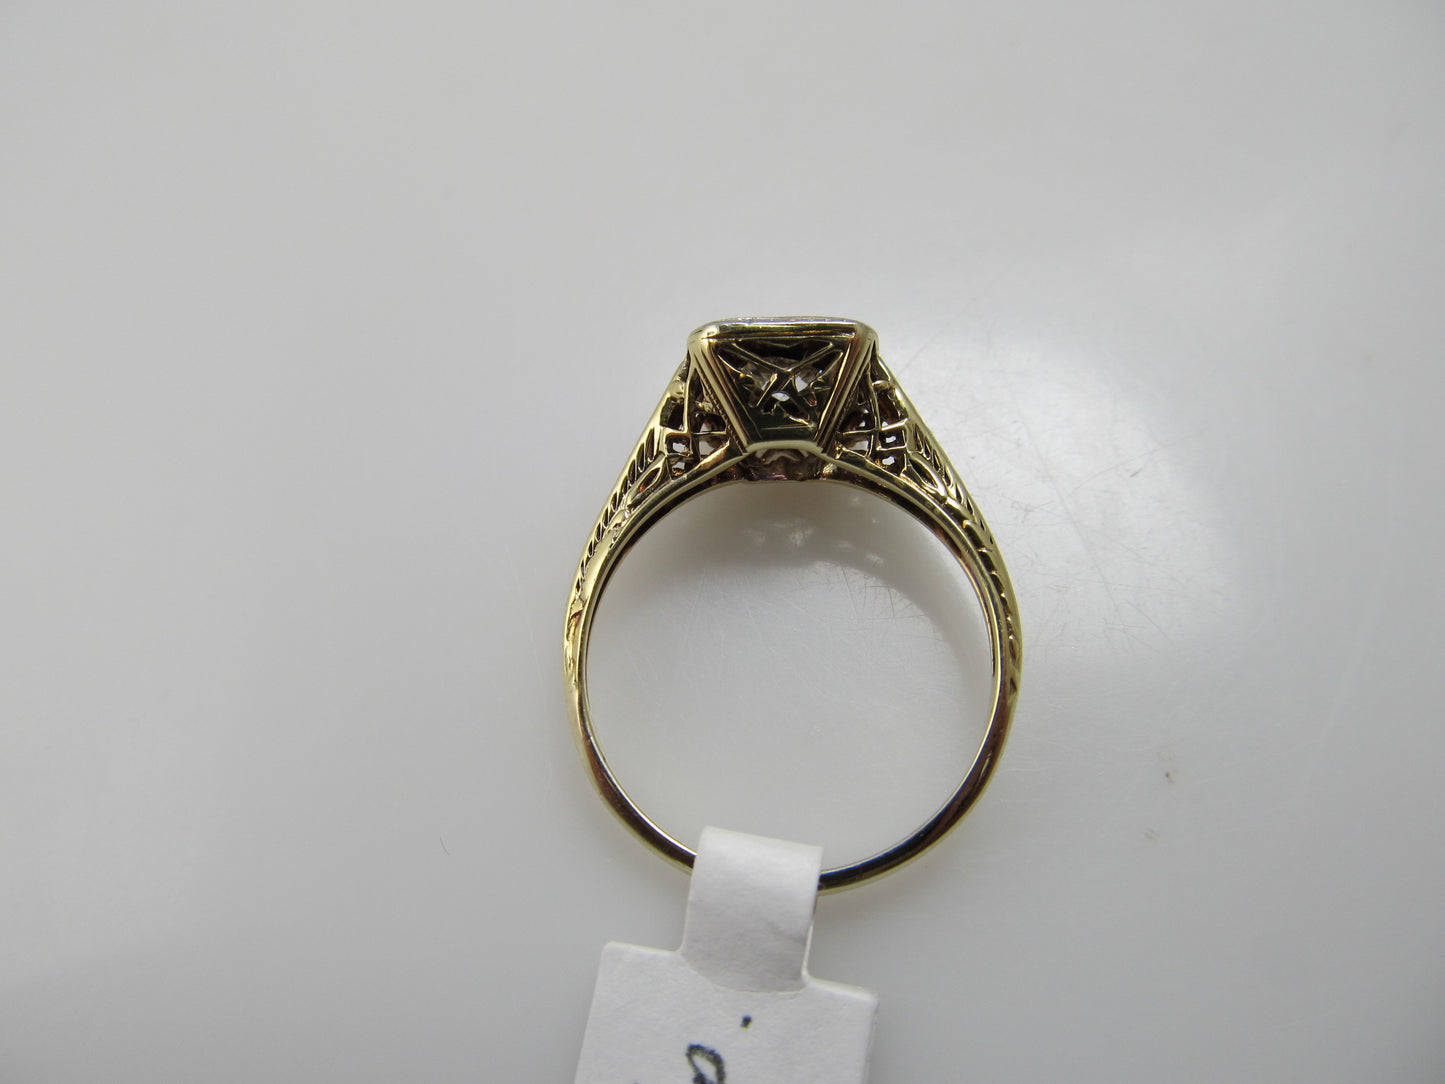 Vintage 18k yellow gold filigree diamond engagement ring